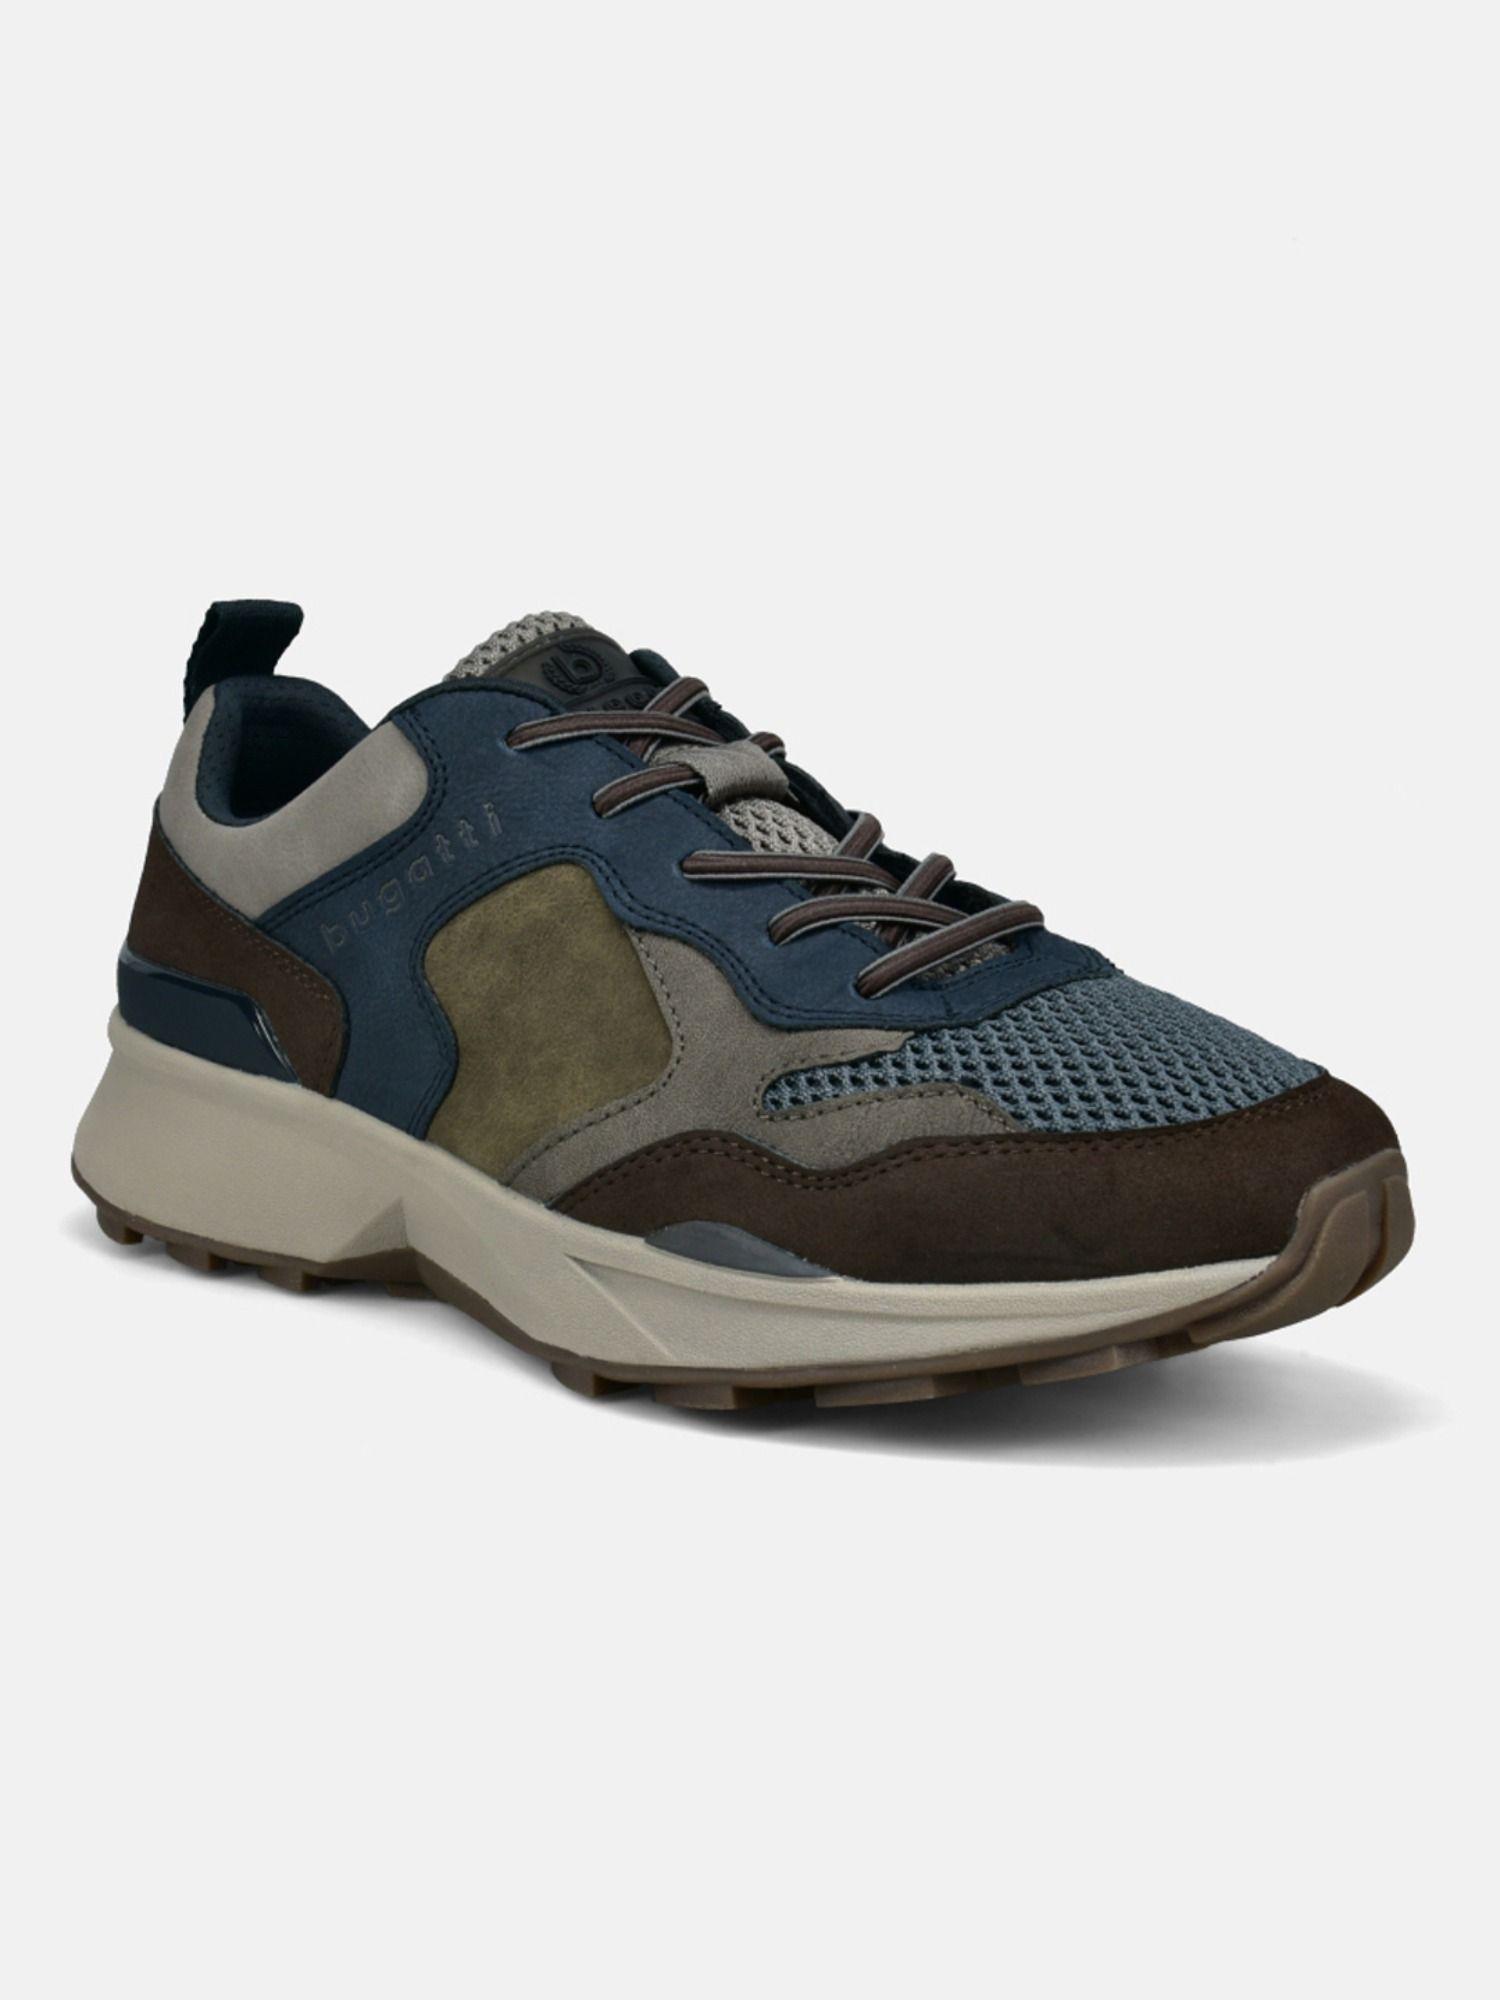 zion navy blue & brown men sports walking shoes